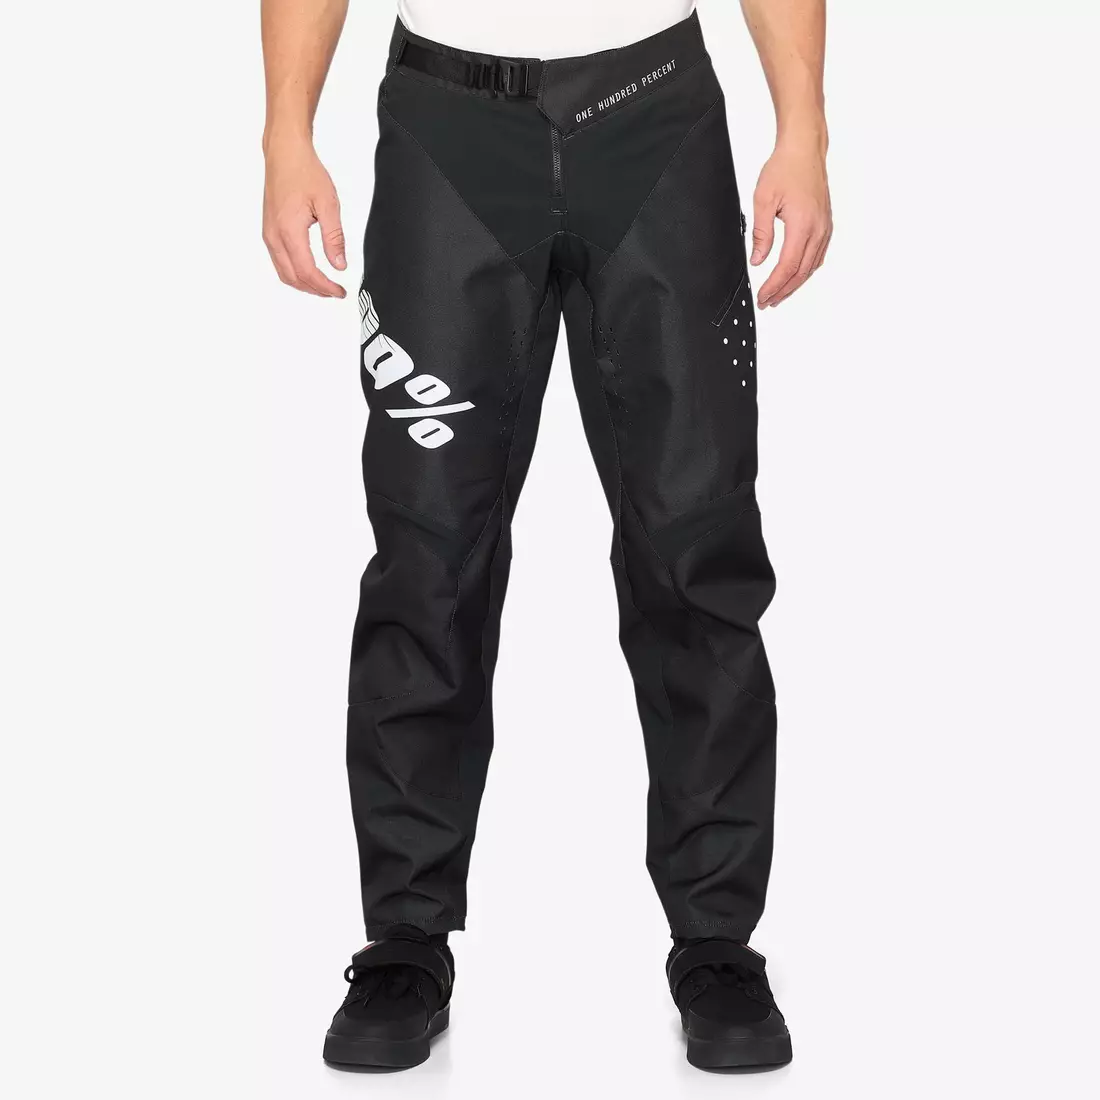 100% spodnie rowerowe męskie R-CORE black STO-43105-001-28